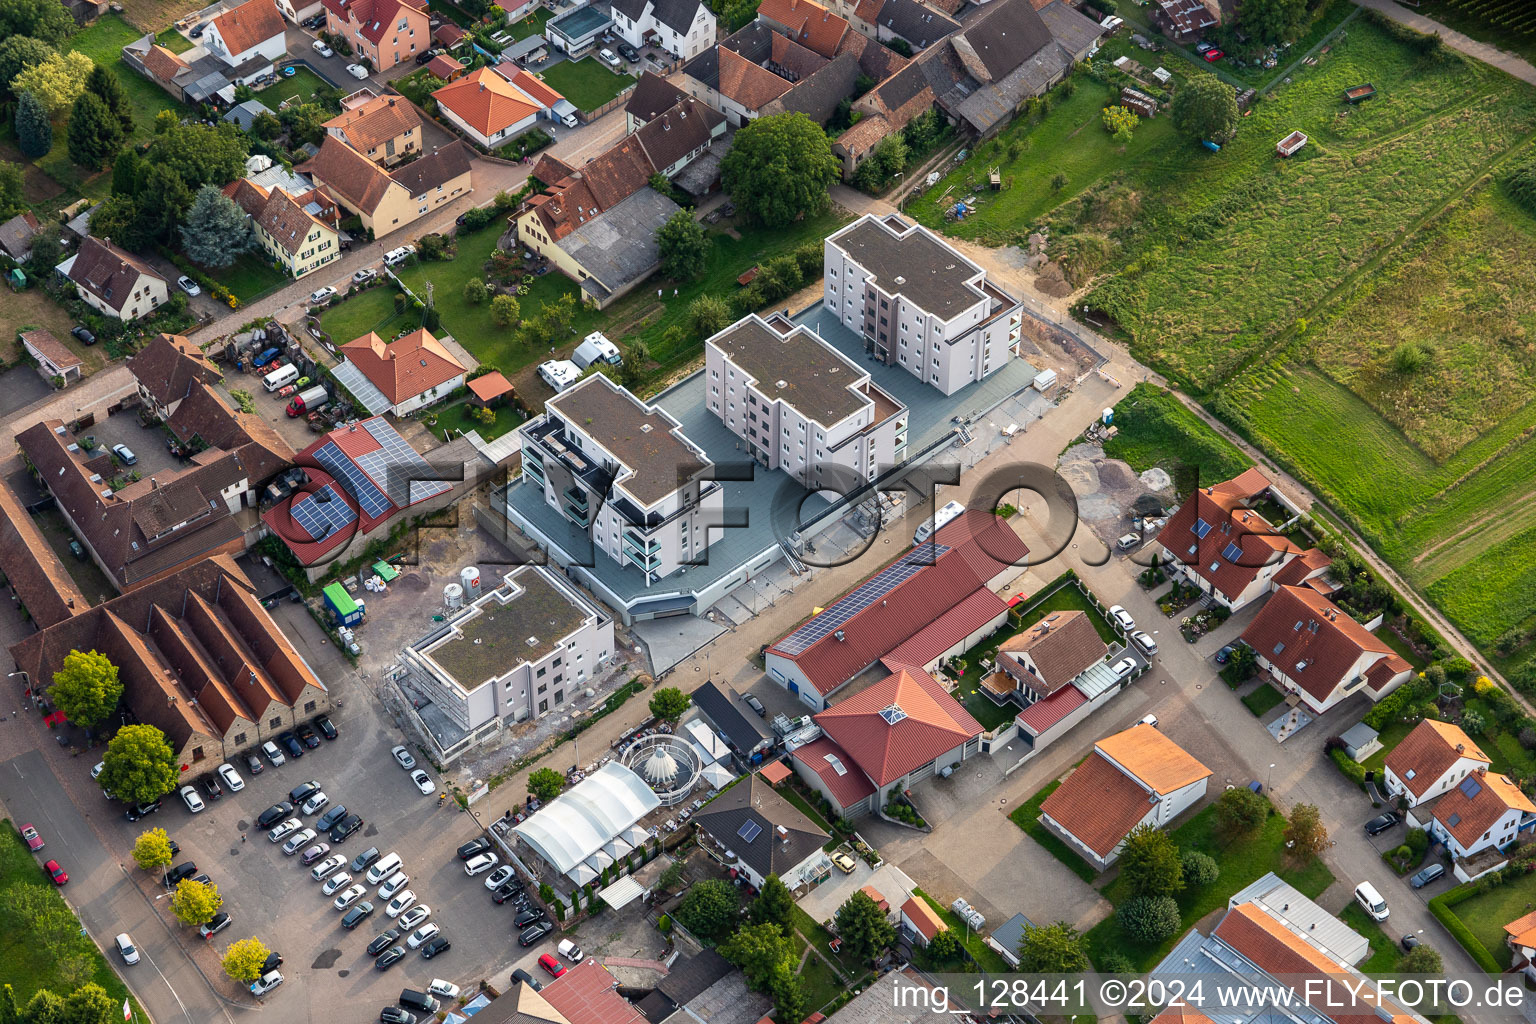 Aerial view of New buildings on Silvanerstr in the district Schweigen in Schweigen-Rechtenbach in the state Rhineland-Palatinate, Germany